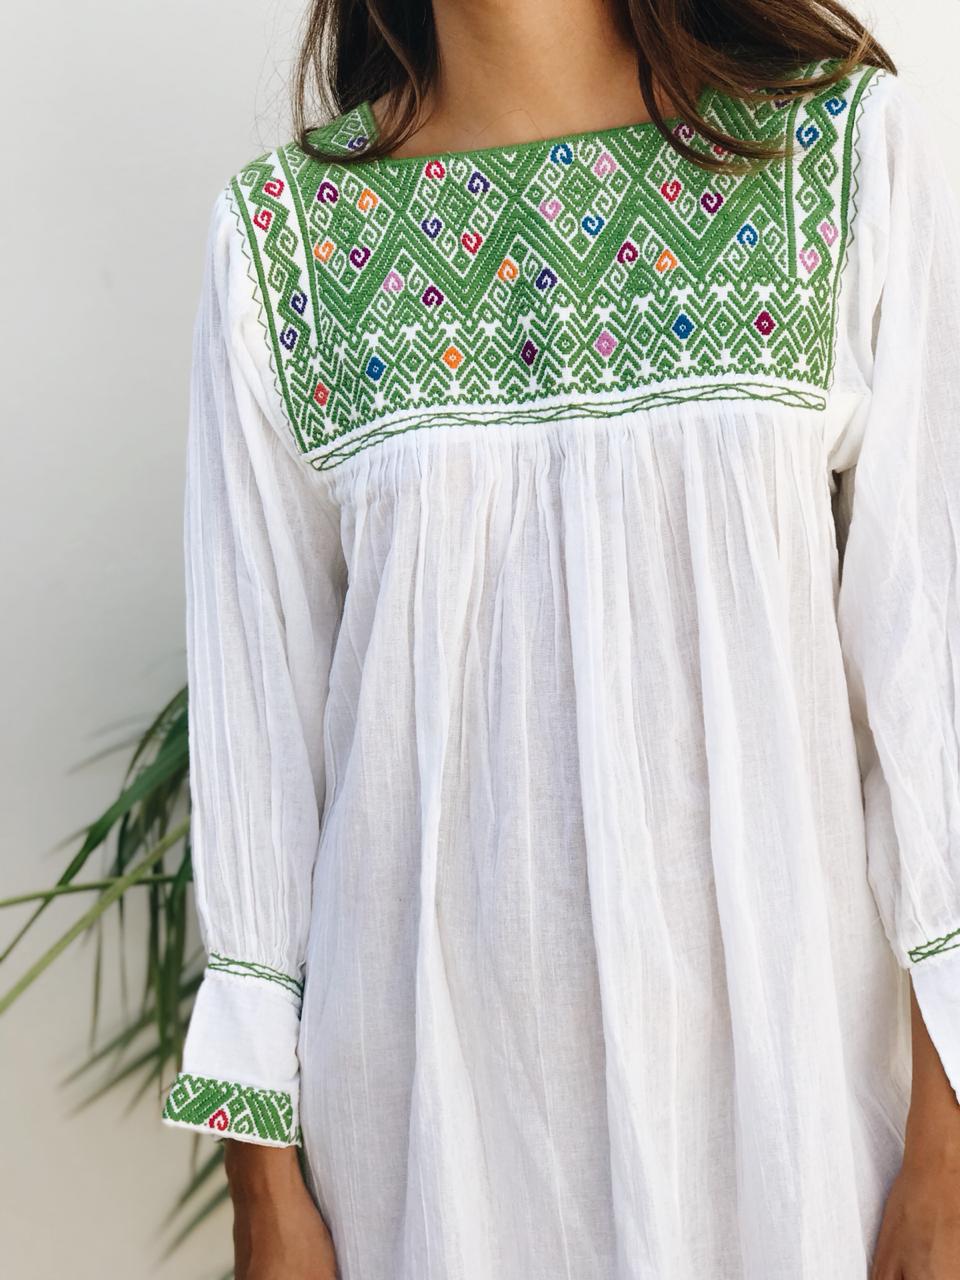 Chiapas embroidered blouse - Wanderlustulum